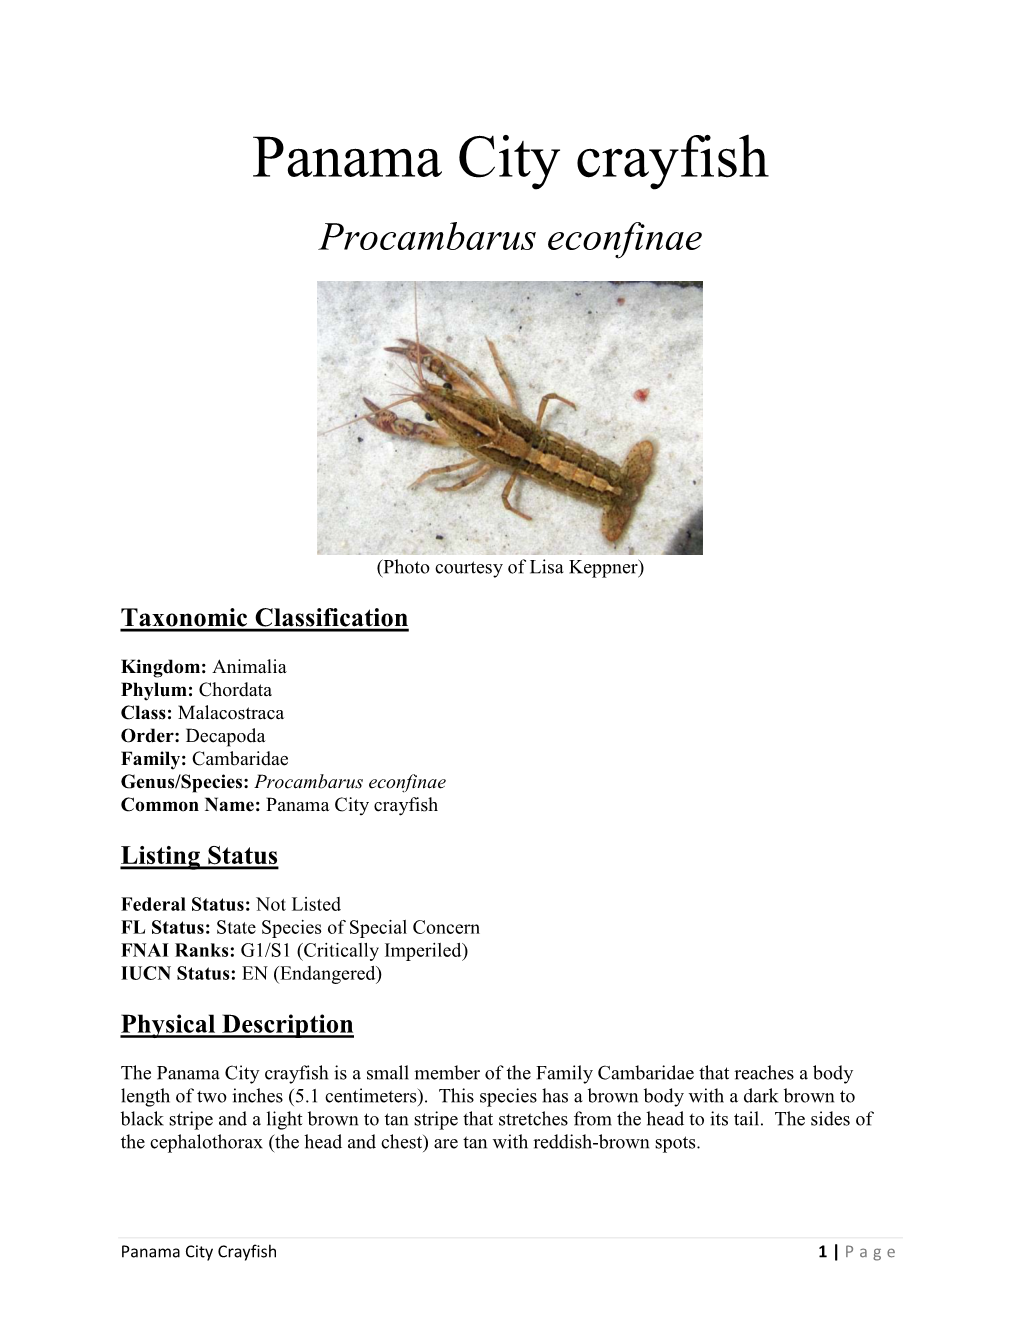 Panama City Crayfish